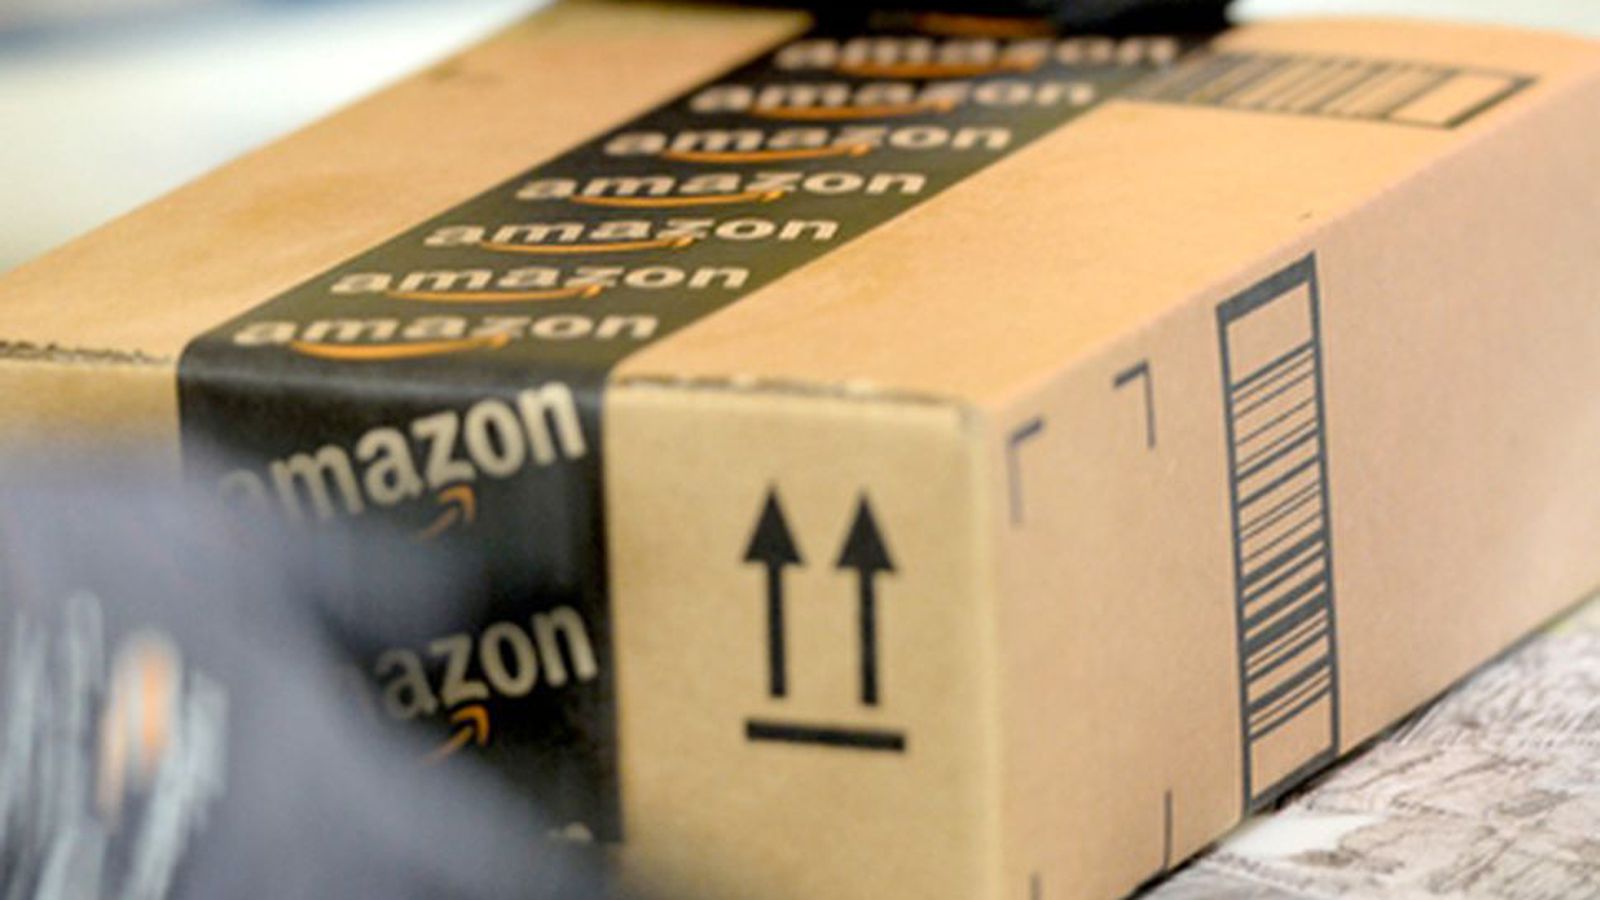 Oleada de vendedores fraudulentos en Amazon